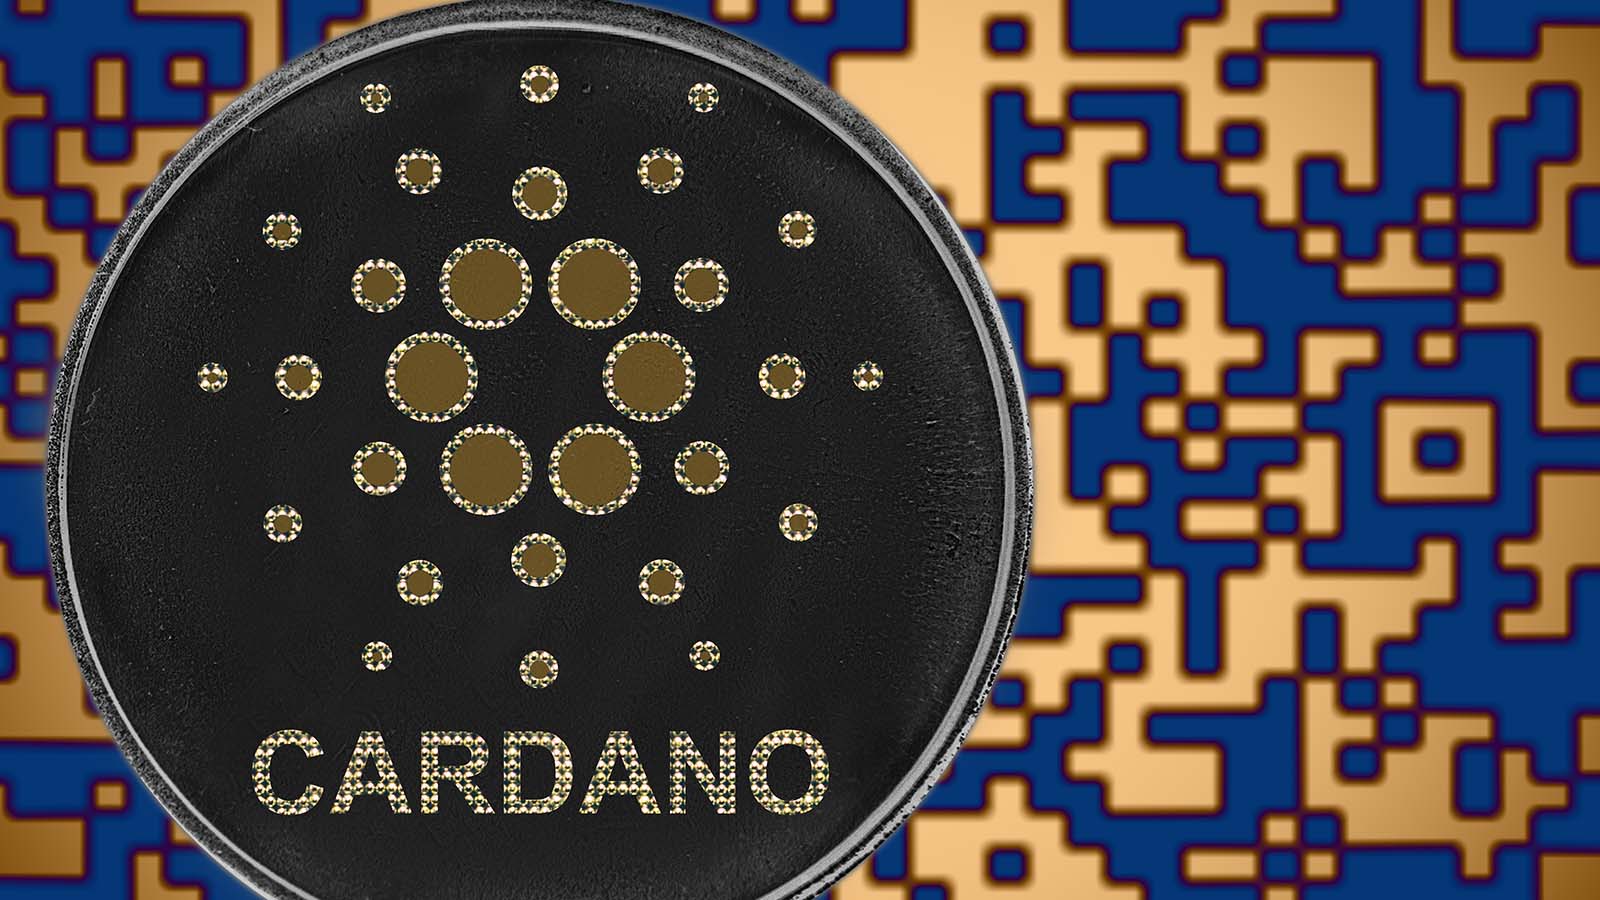 Cardano (ADA) token with blue and orange digital background representing Cardano Price Predictions.